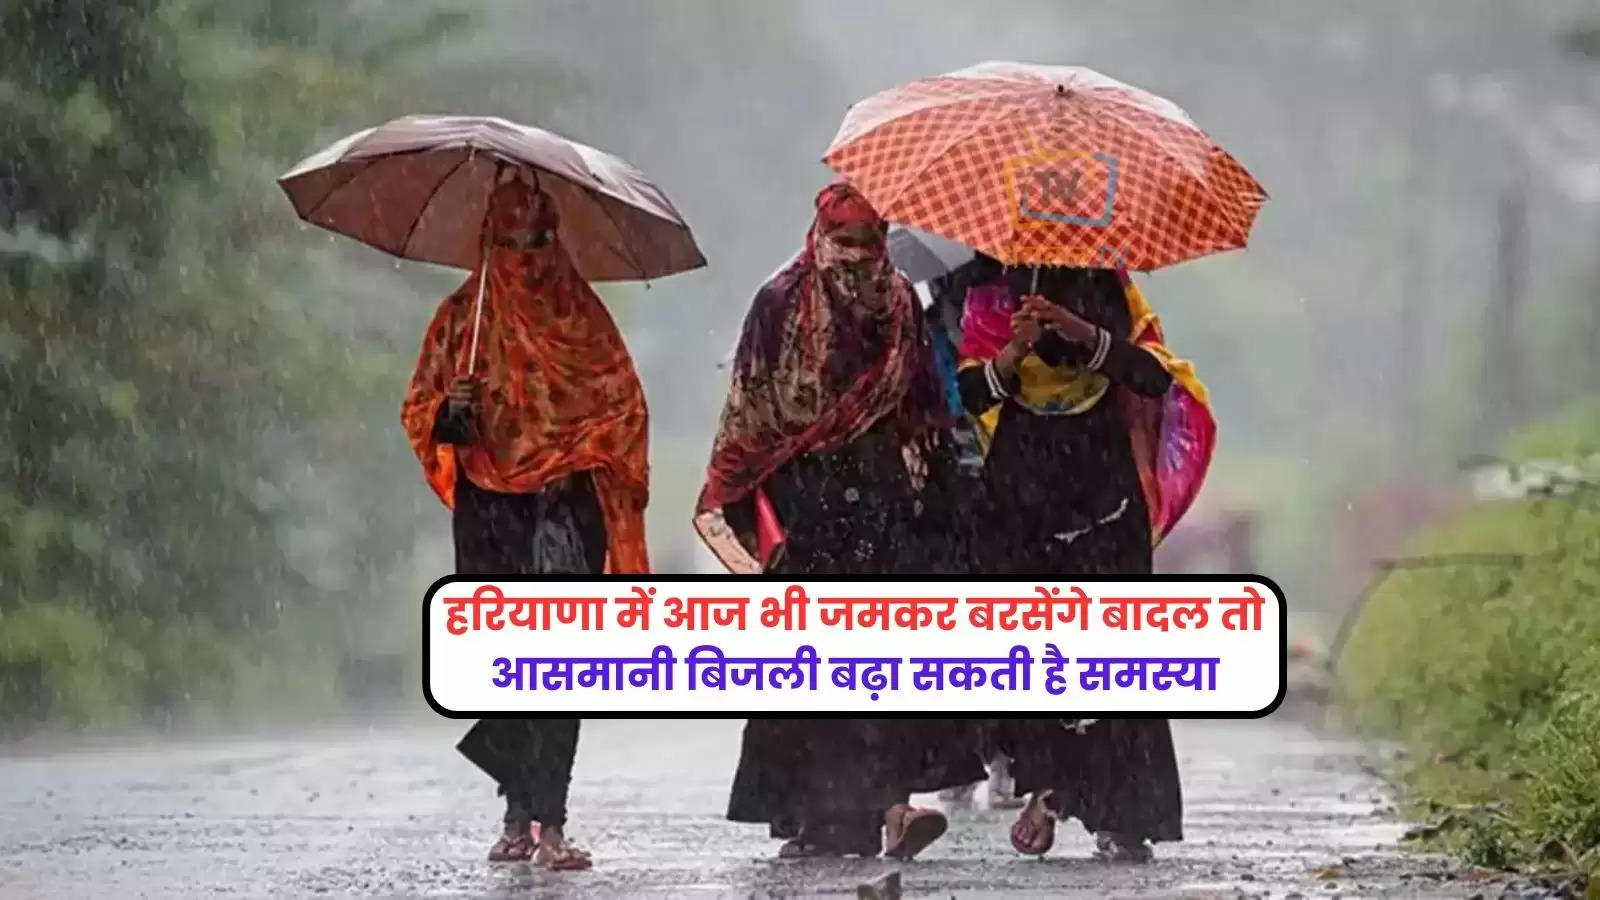 haryana-weather-update-imd-alert-thunderstorm-lightning-impact-on-farmers-haryana-weather-today